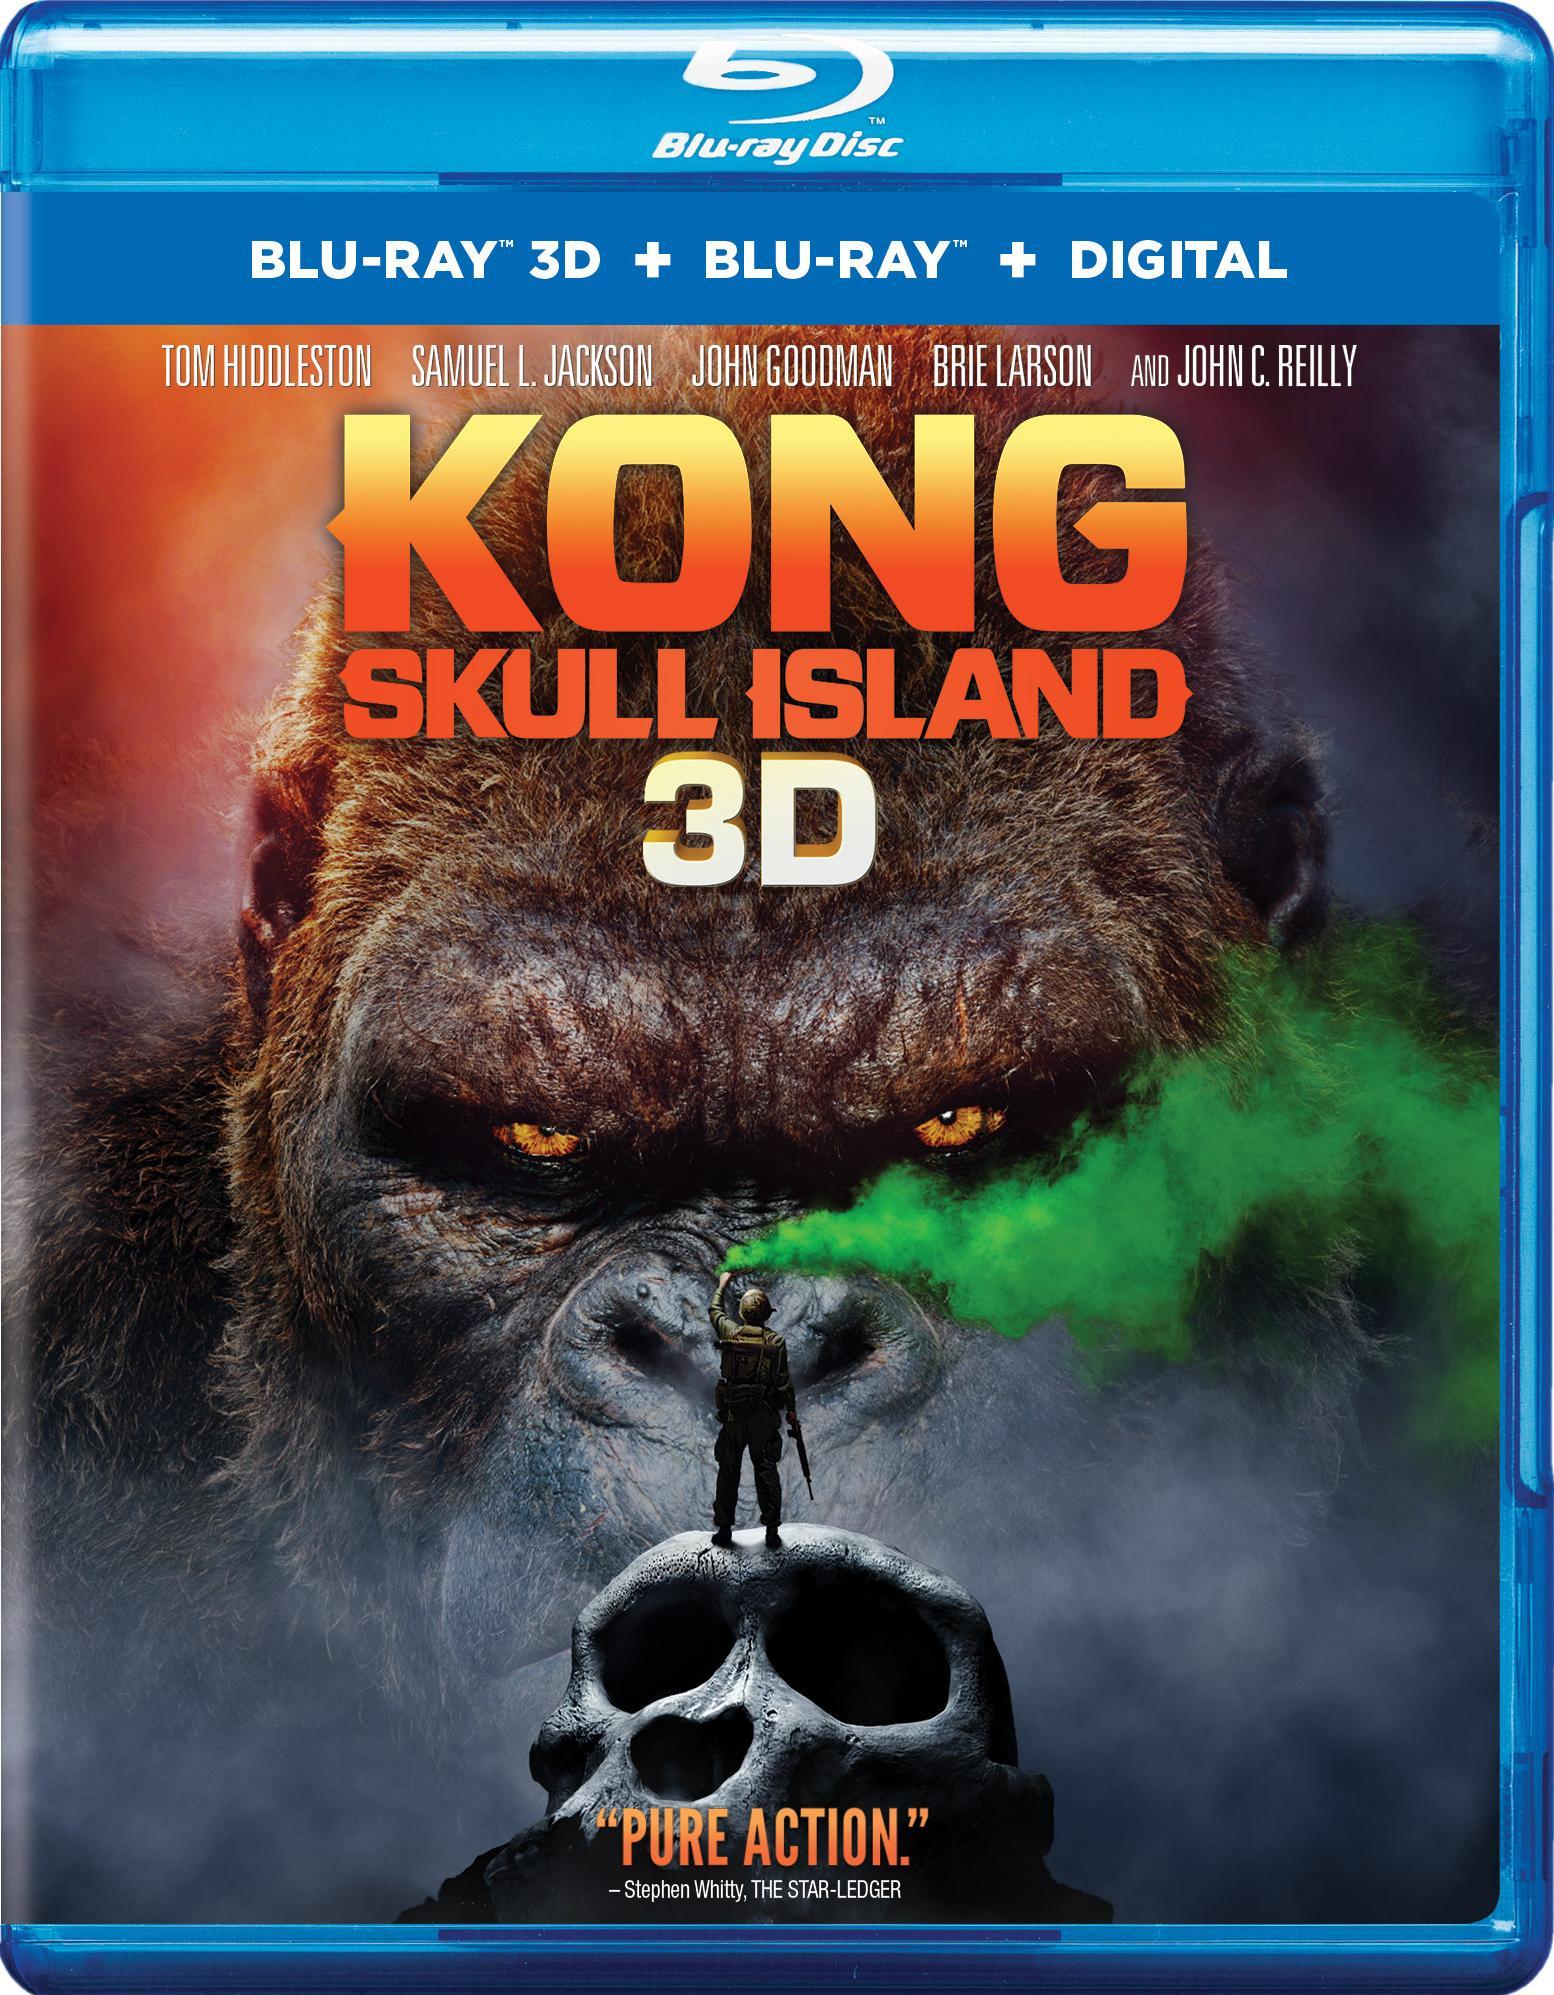 [金刚·骷髅岛].Kong.Skull.Island.2017.3D.BluRay.1080p.AVC.TrueHD.7.1-LKReborn@CHDBits   45.3G-1.jpg